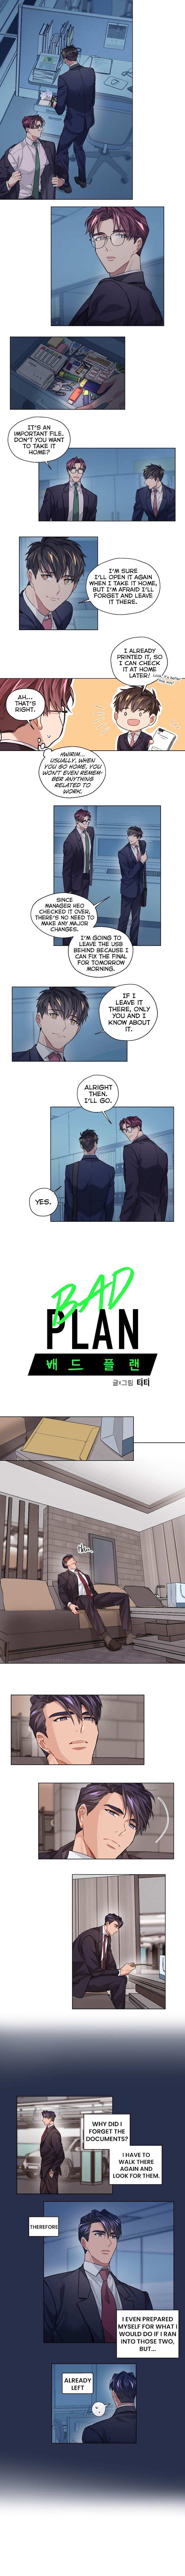 Bad Plan - Page 2